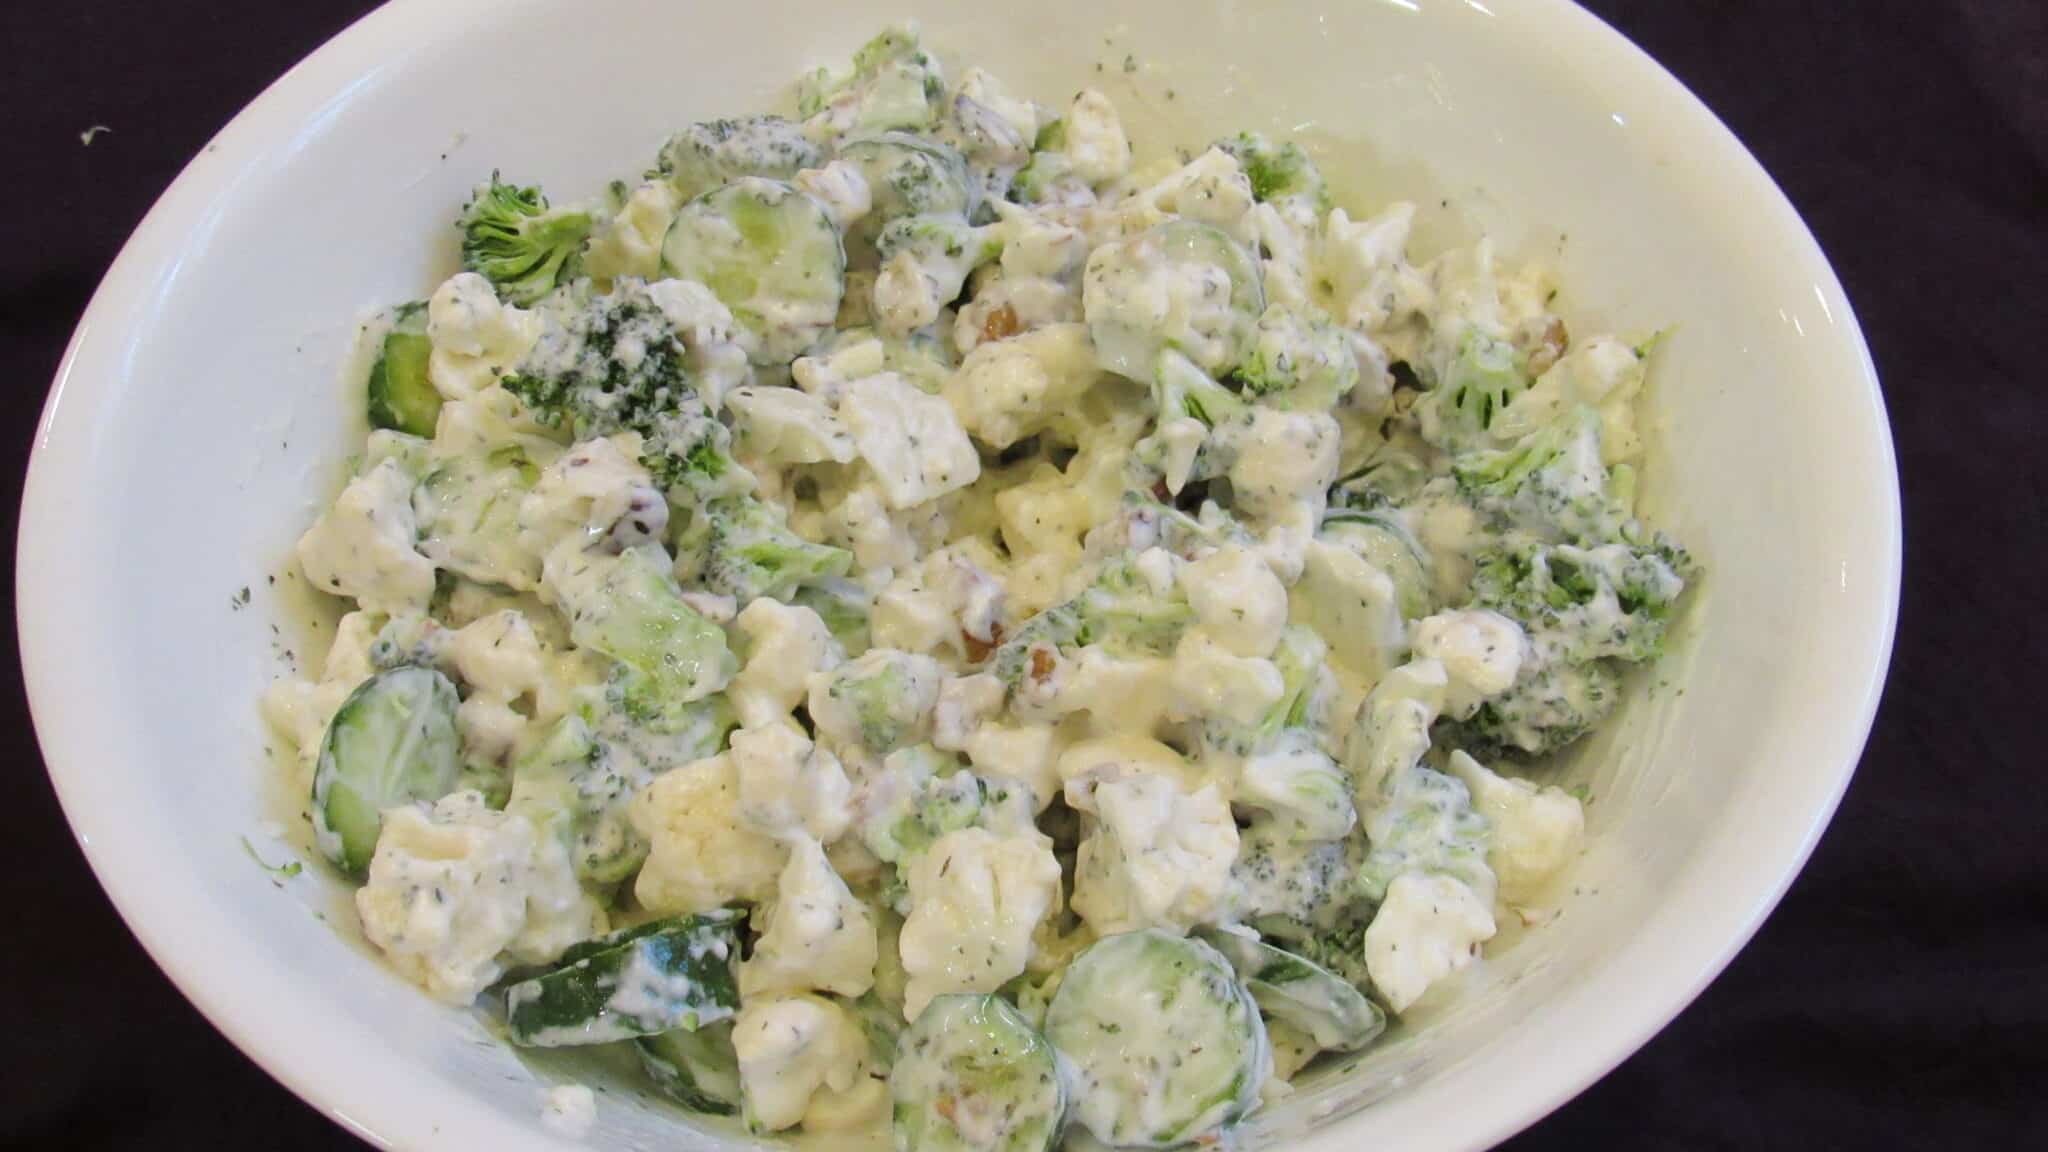 keto broccoli cauliflower salad is served on a white bowel.